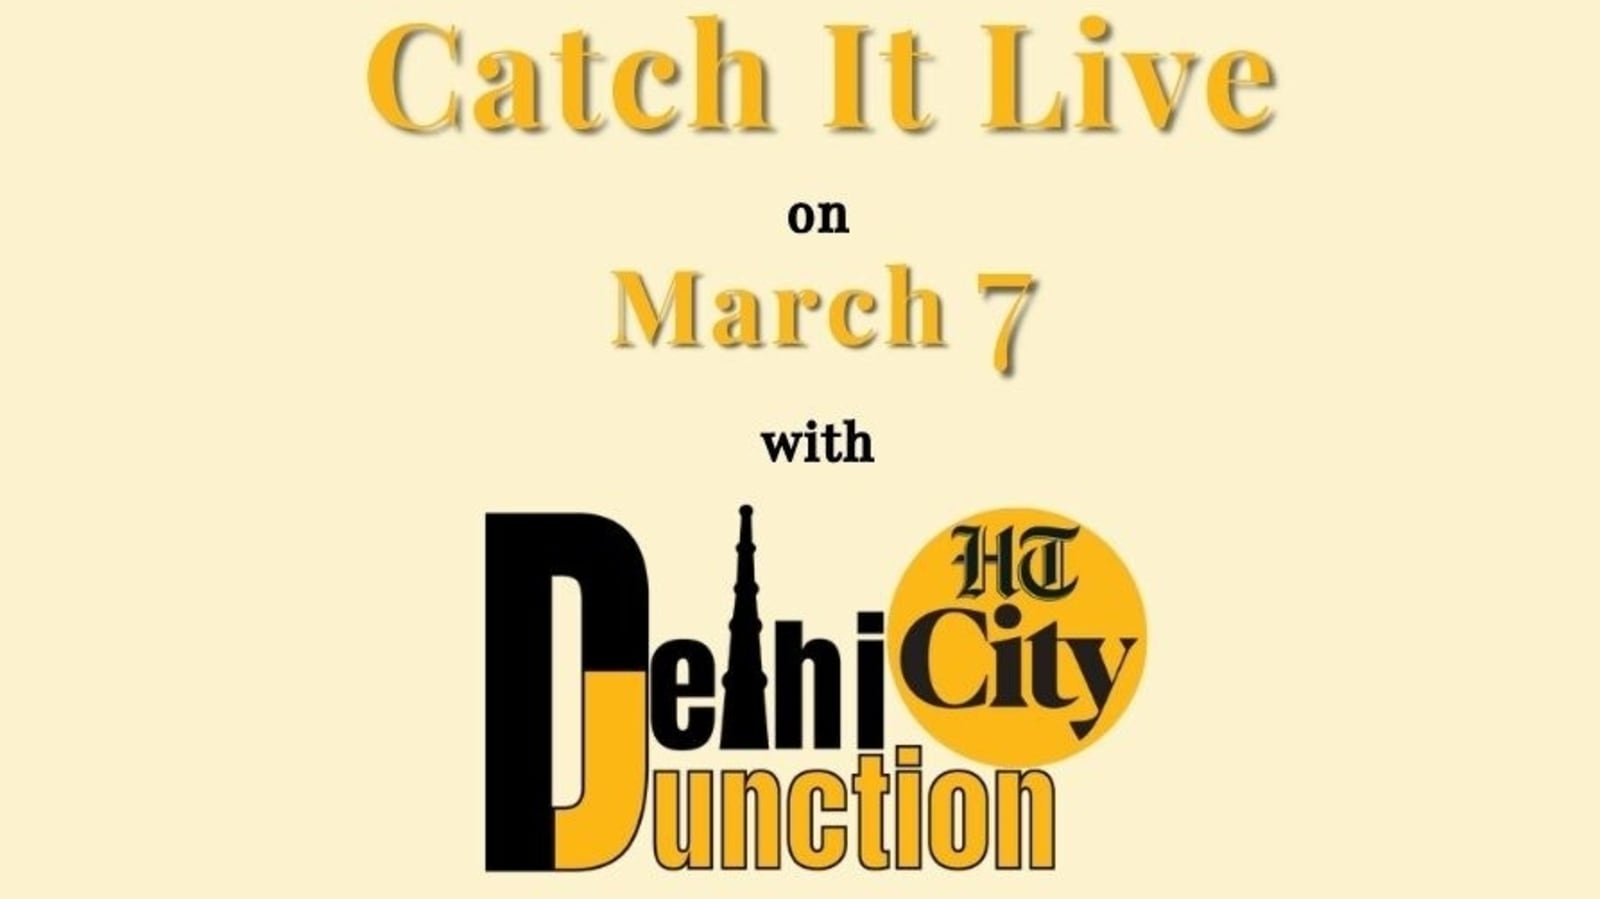 HT City Delhi Junction: Catch It Live on March 7